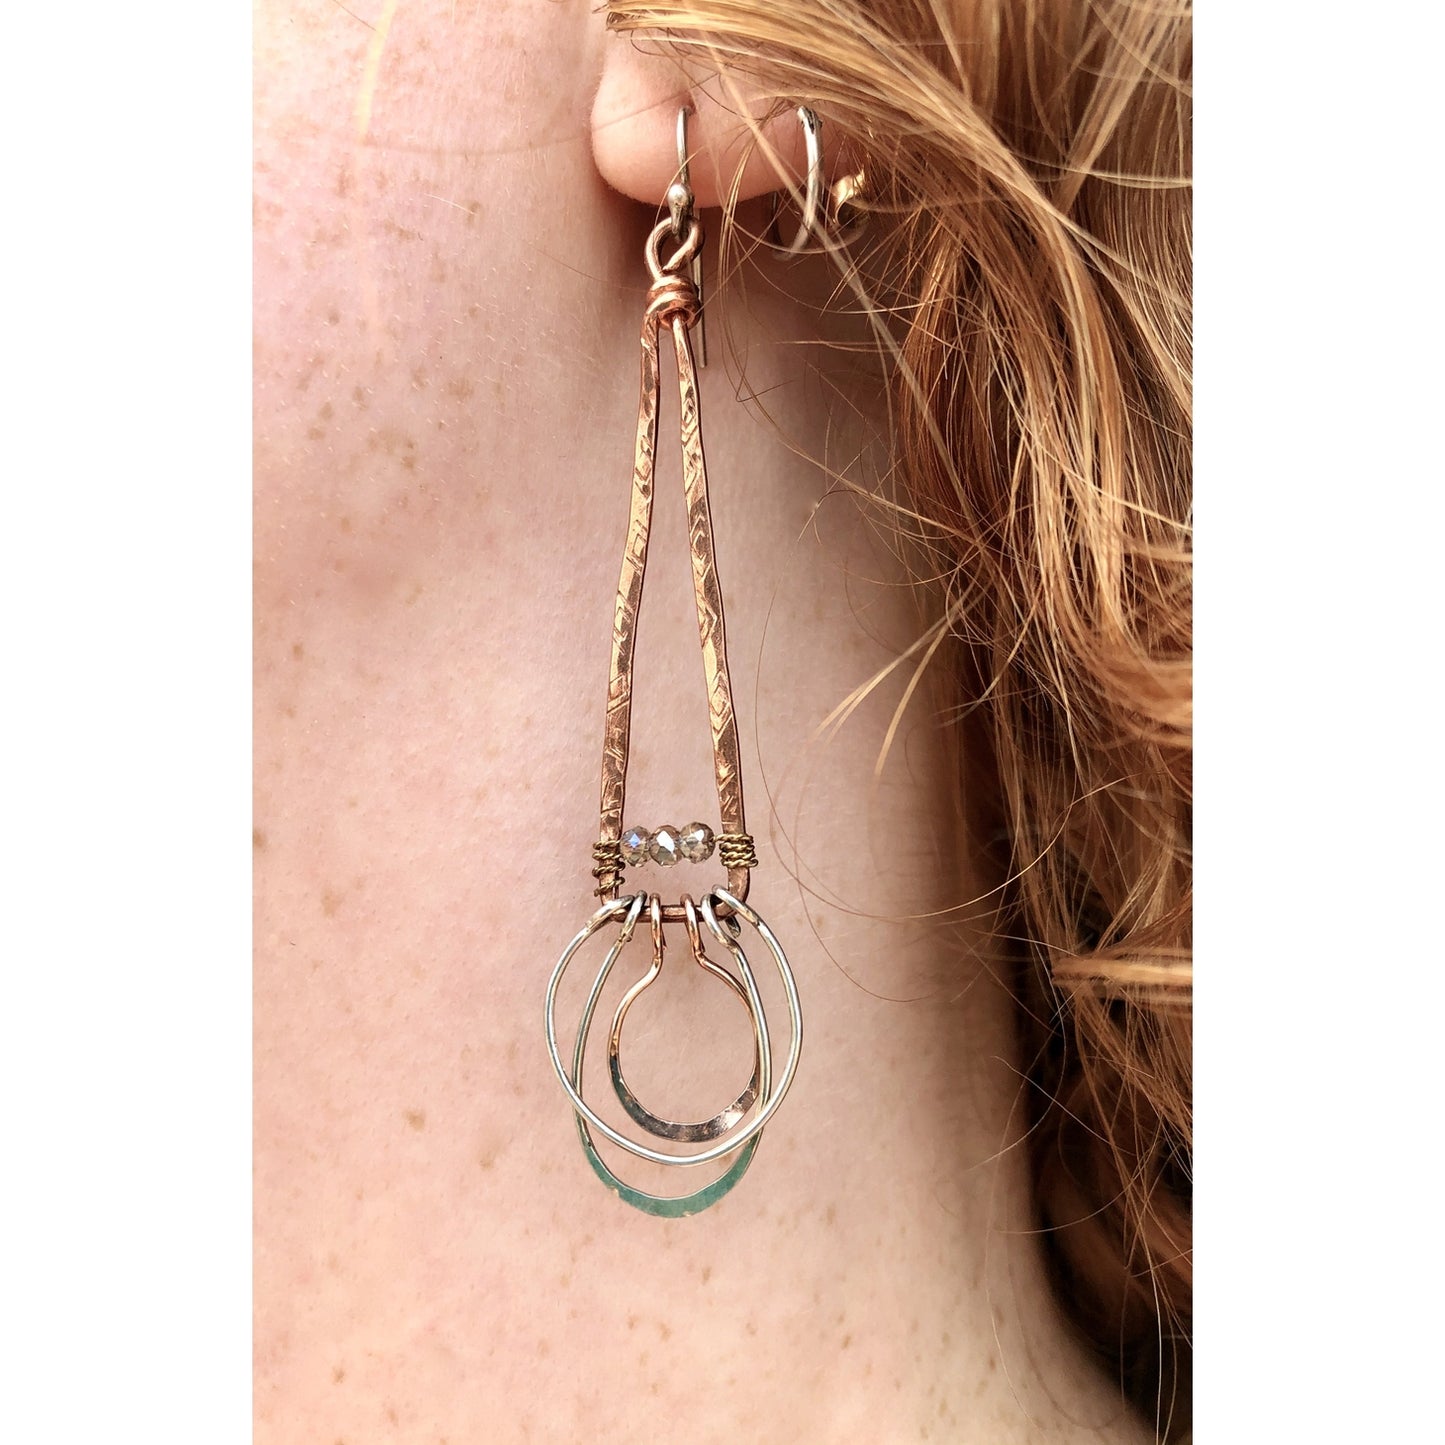 Art By Any Means Acute Copper Earrings